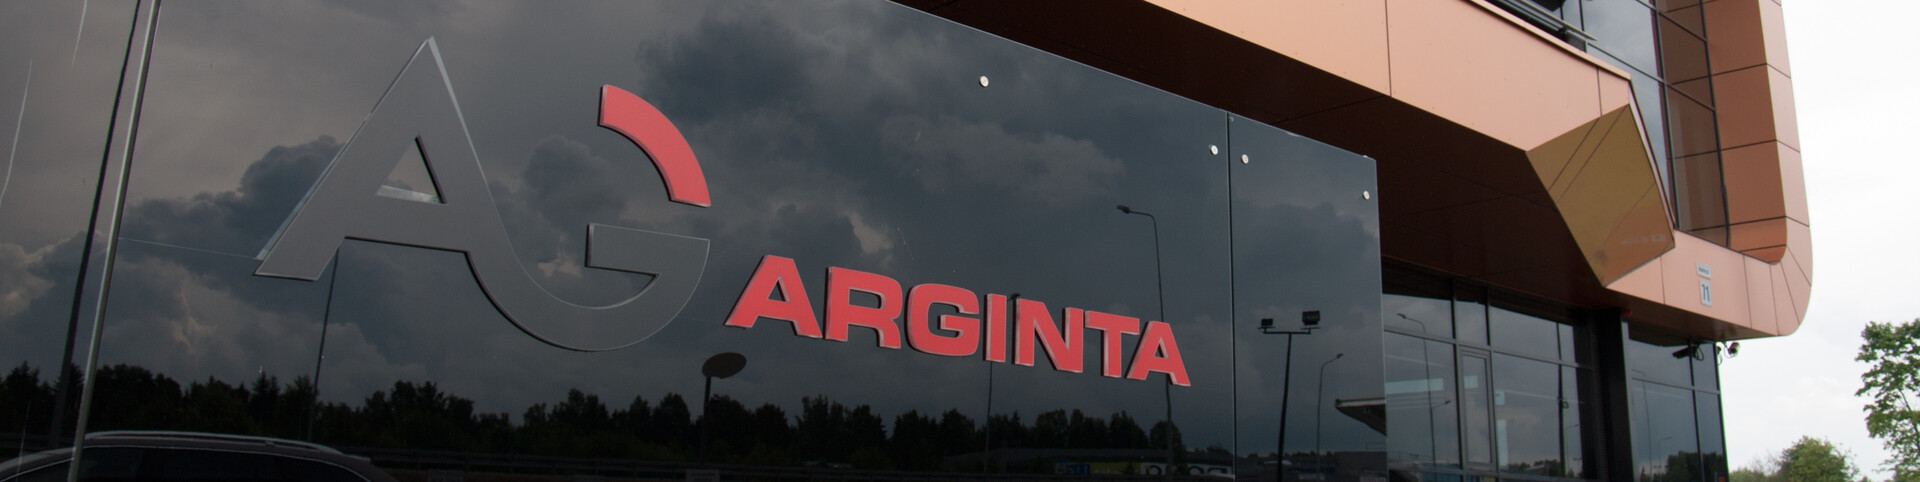 arginta_engineering_hero-banner-building-with-logo